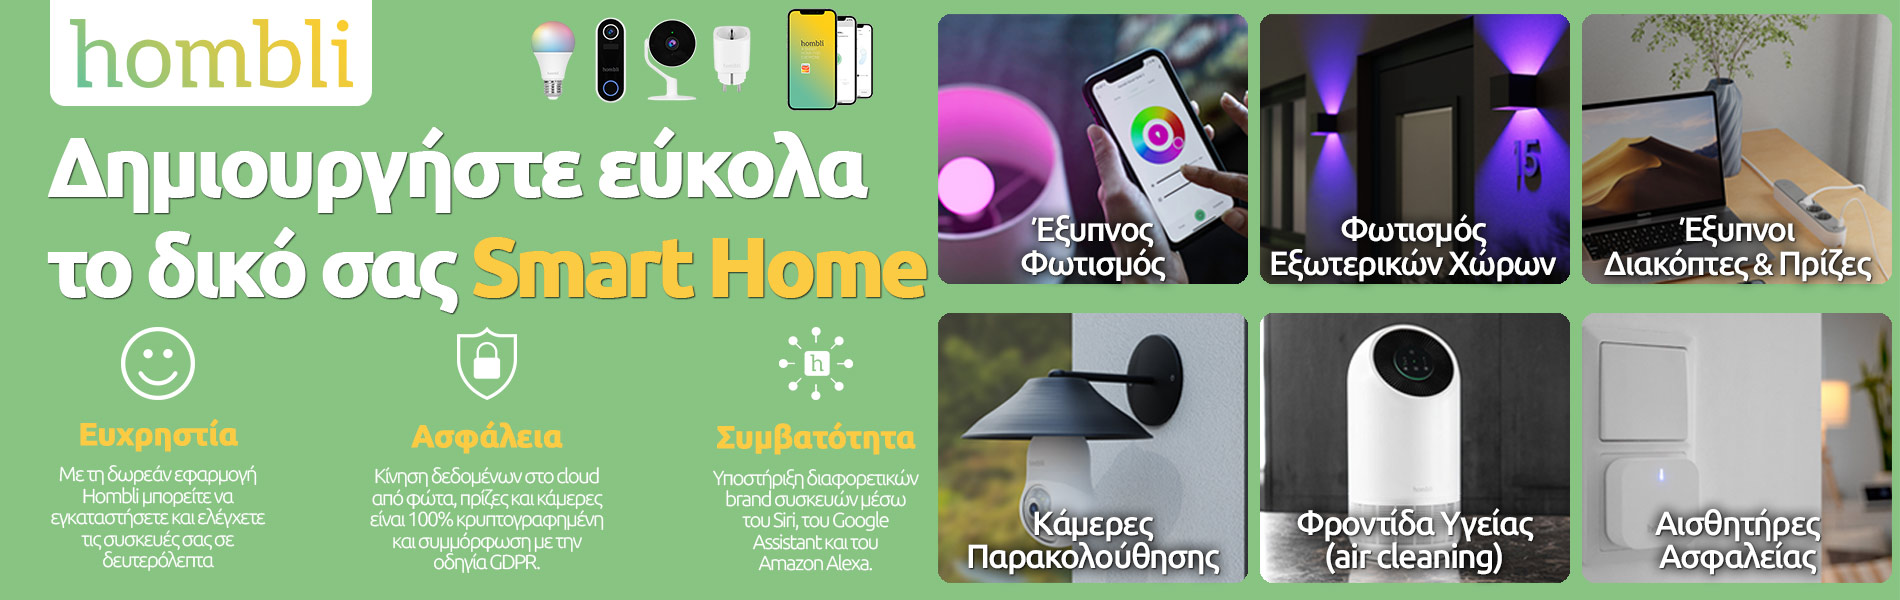 Hombli: Ολοκληρωμένο Line-up προϊόντων Smart Home!